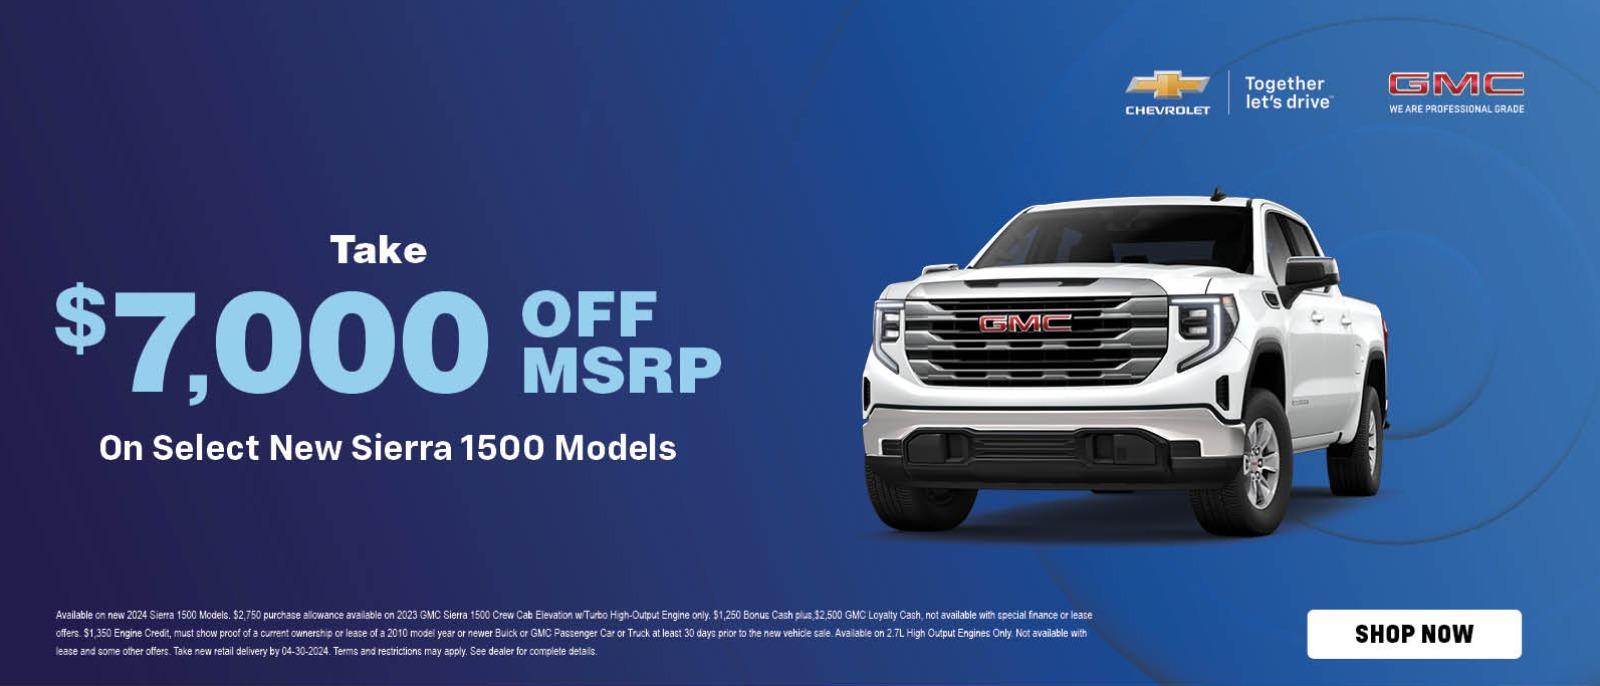 take $7,000 off msrp on select new sierra 1500 models